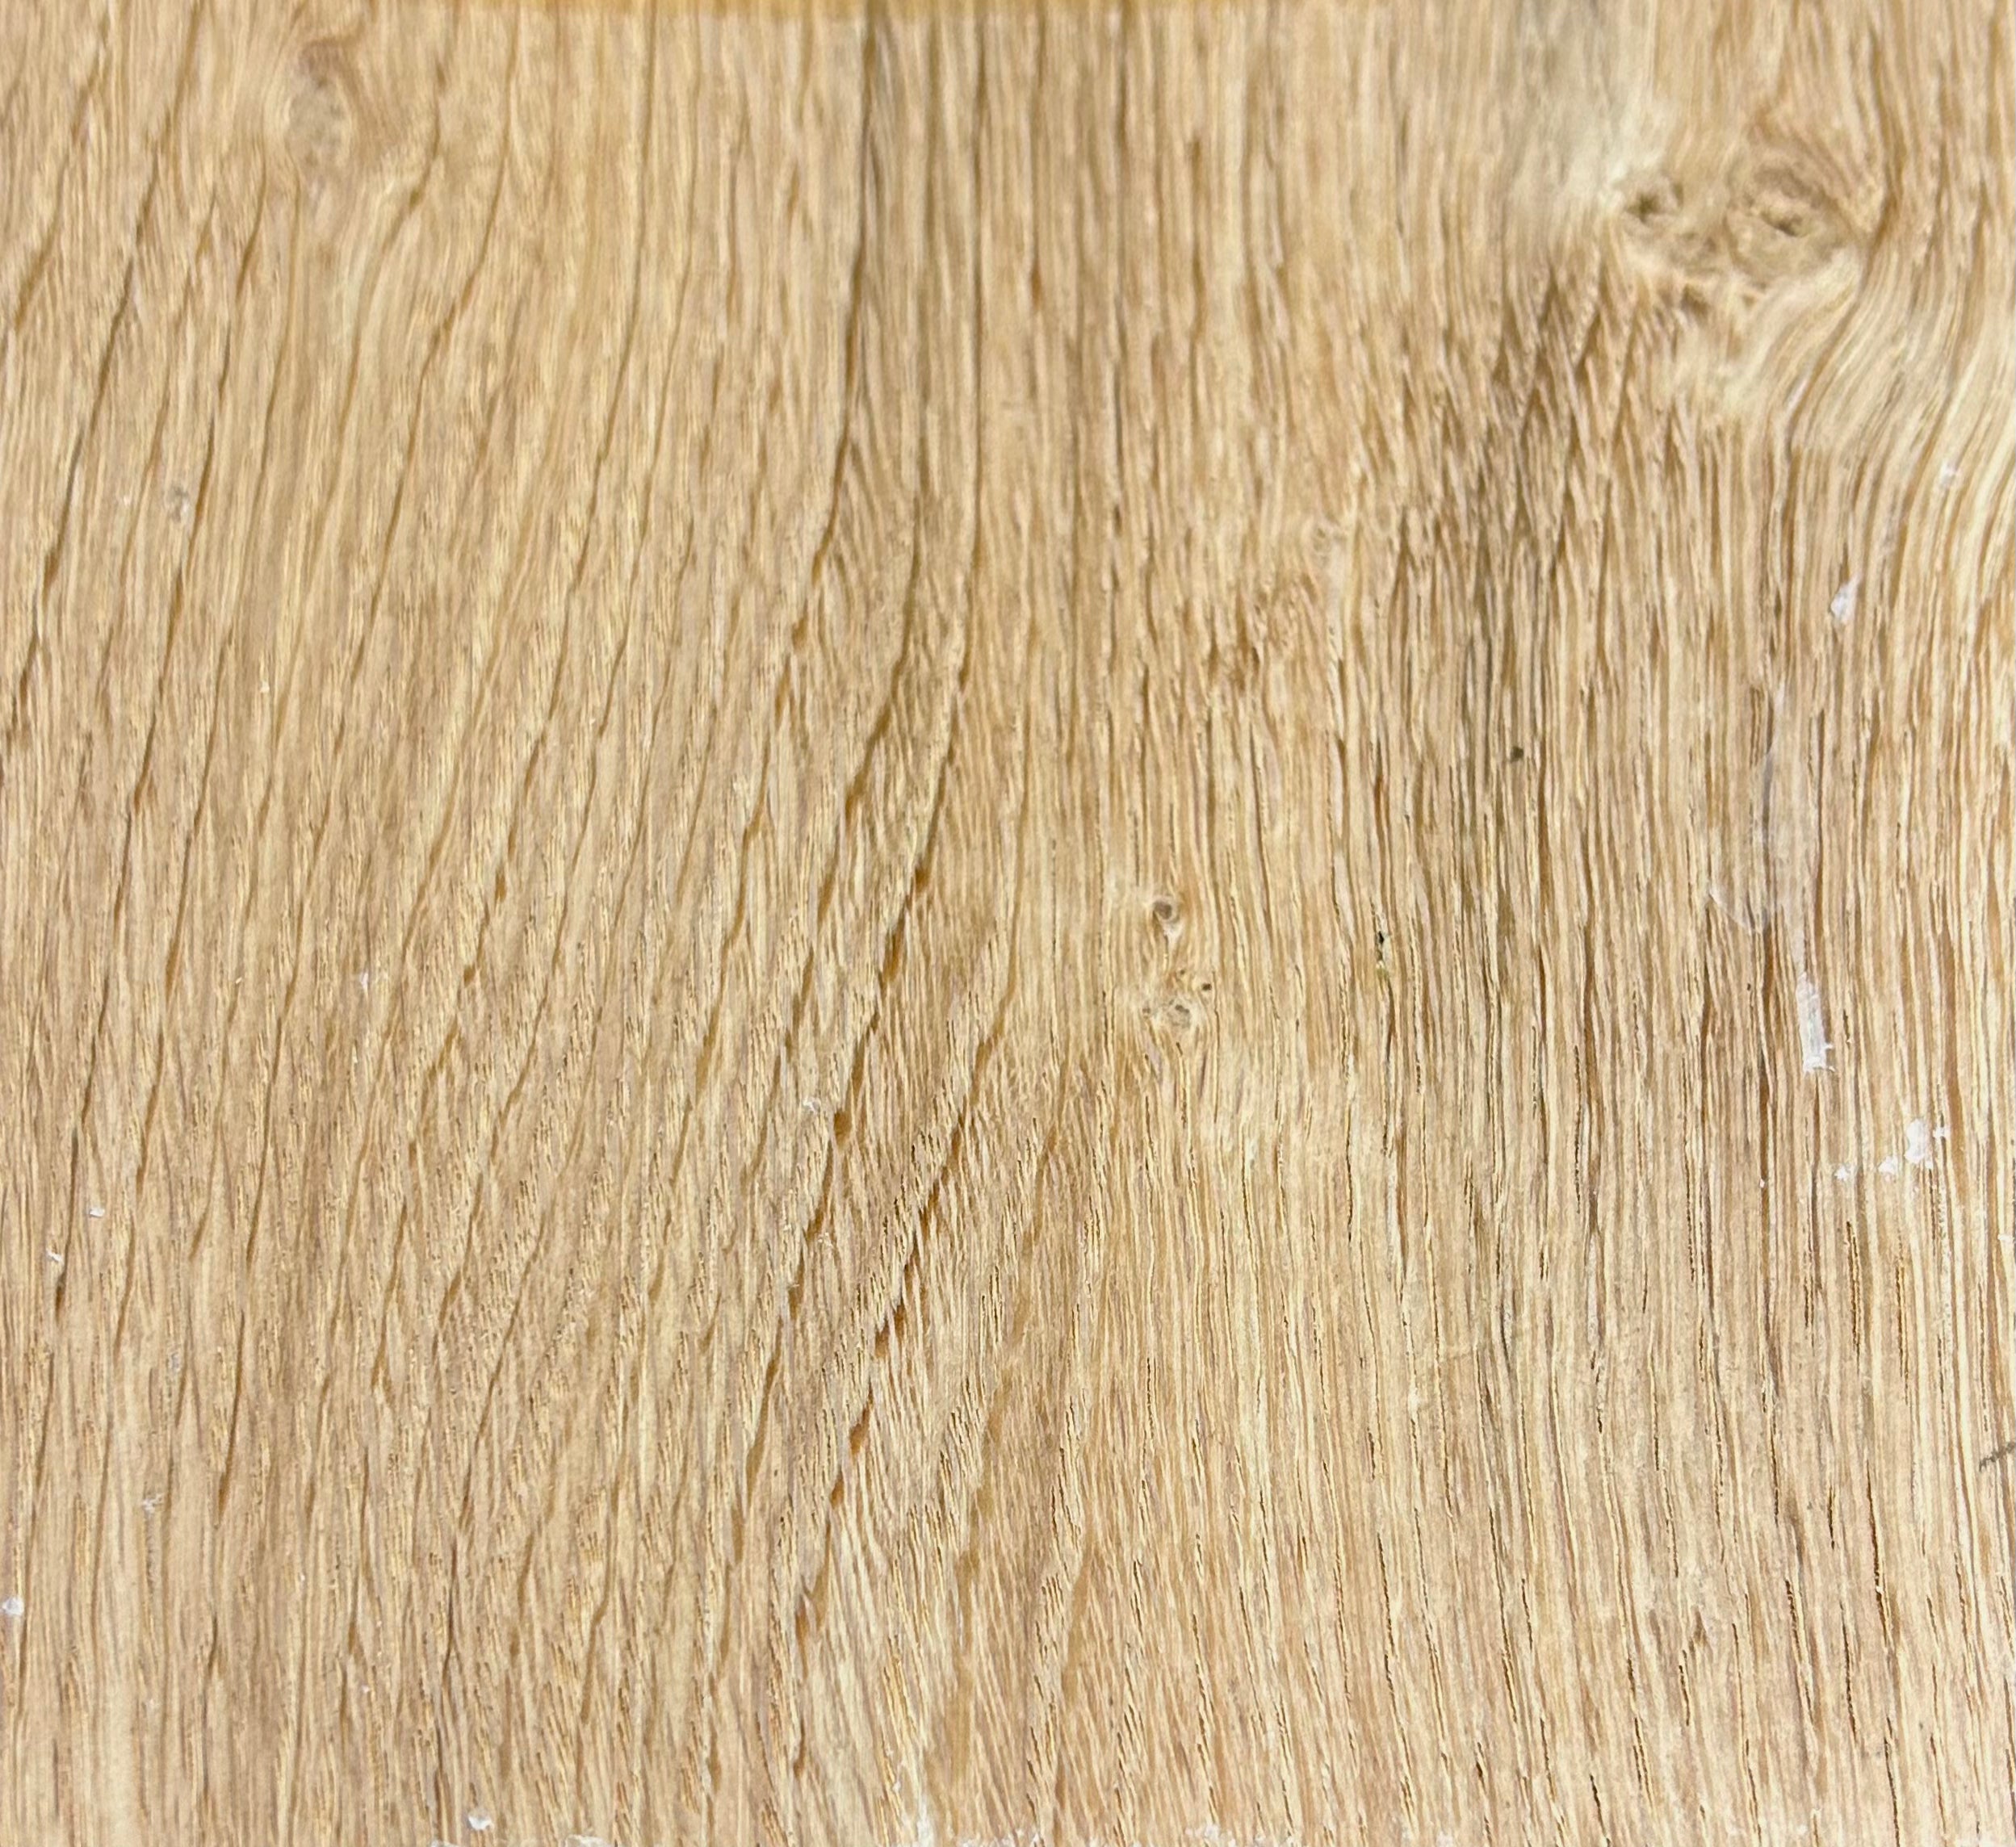 Oak Kiln Dried Woodturning blanks